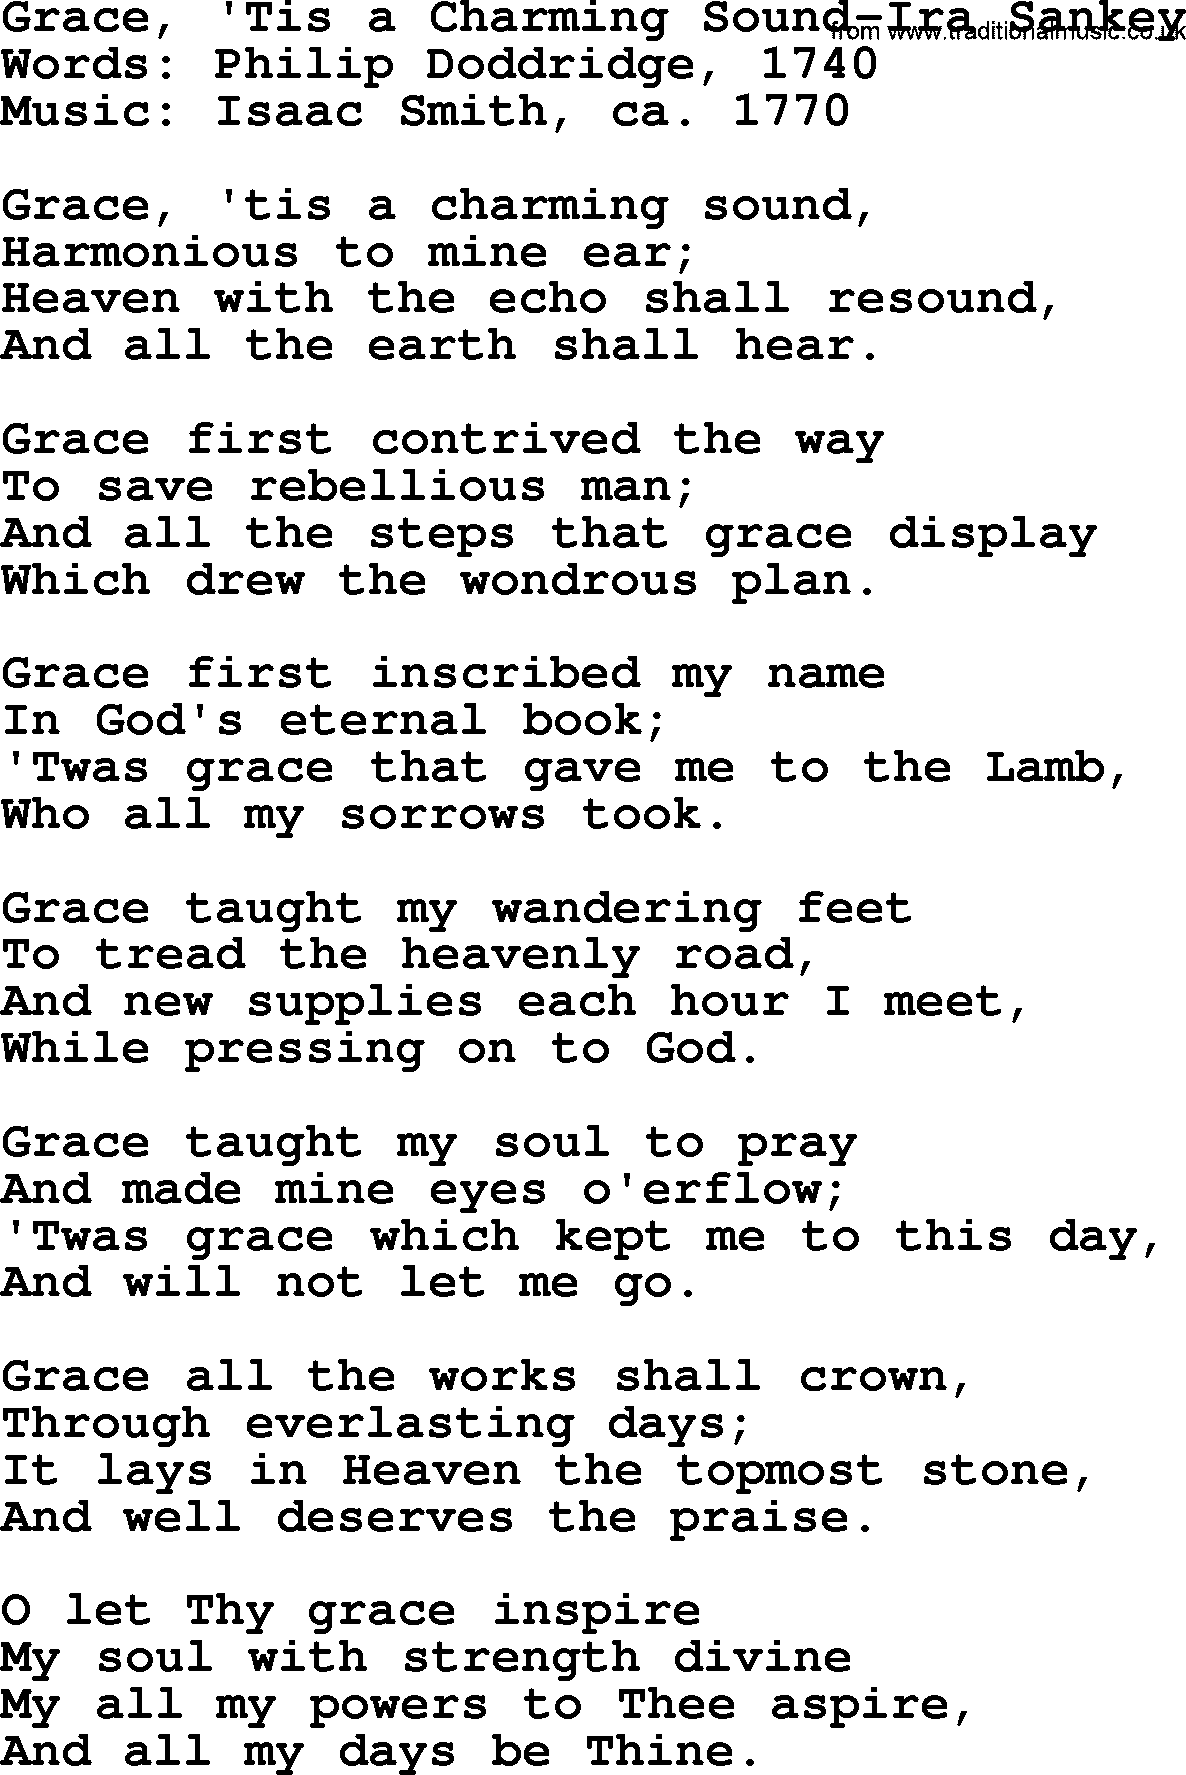 Ira Sankey hymn: Grace, 'Tis a Charming Sound-Ira Sankey, lyrics